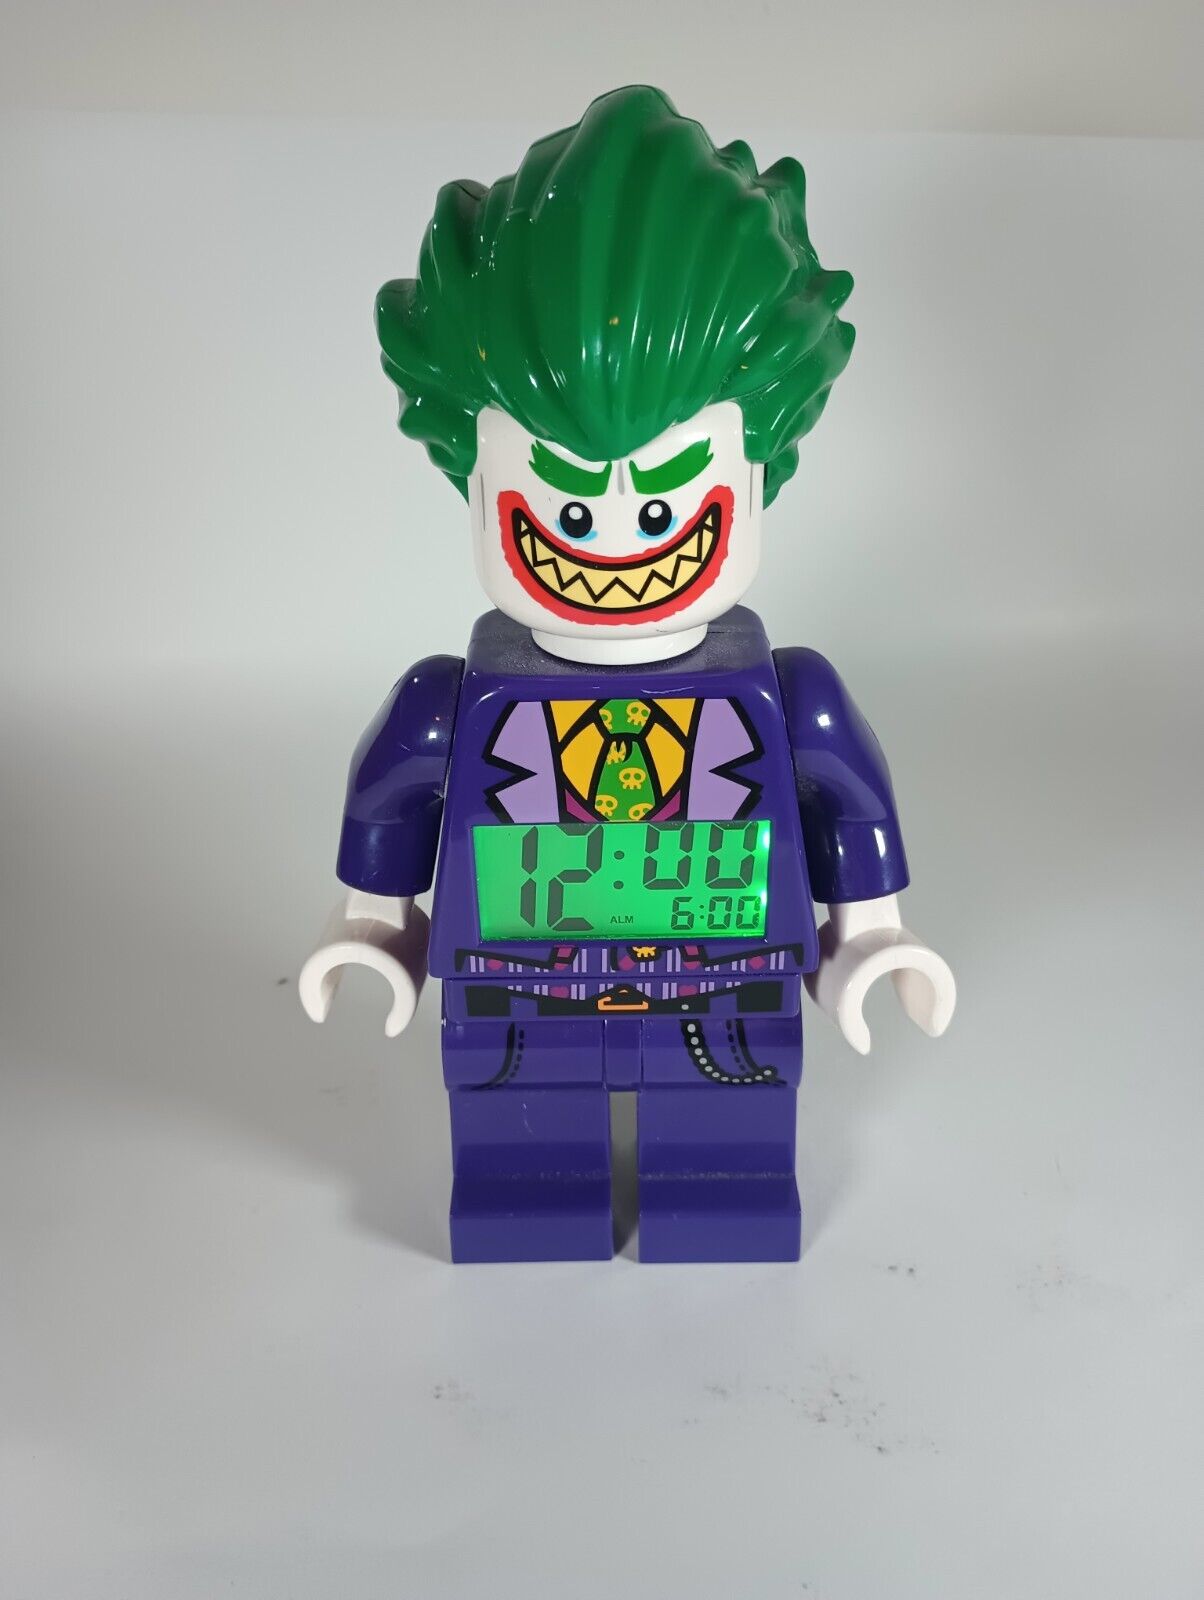 Lego Joker Digital Clock, The Lego Batman Movie, Tested, Works, DC Superhero